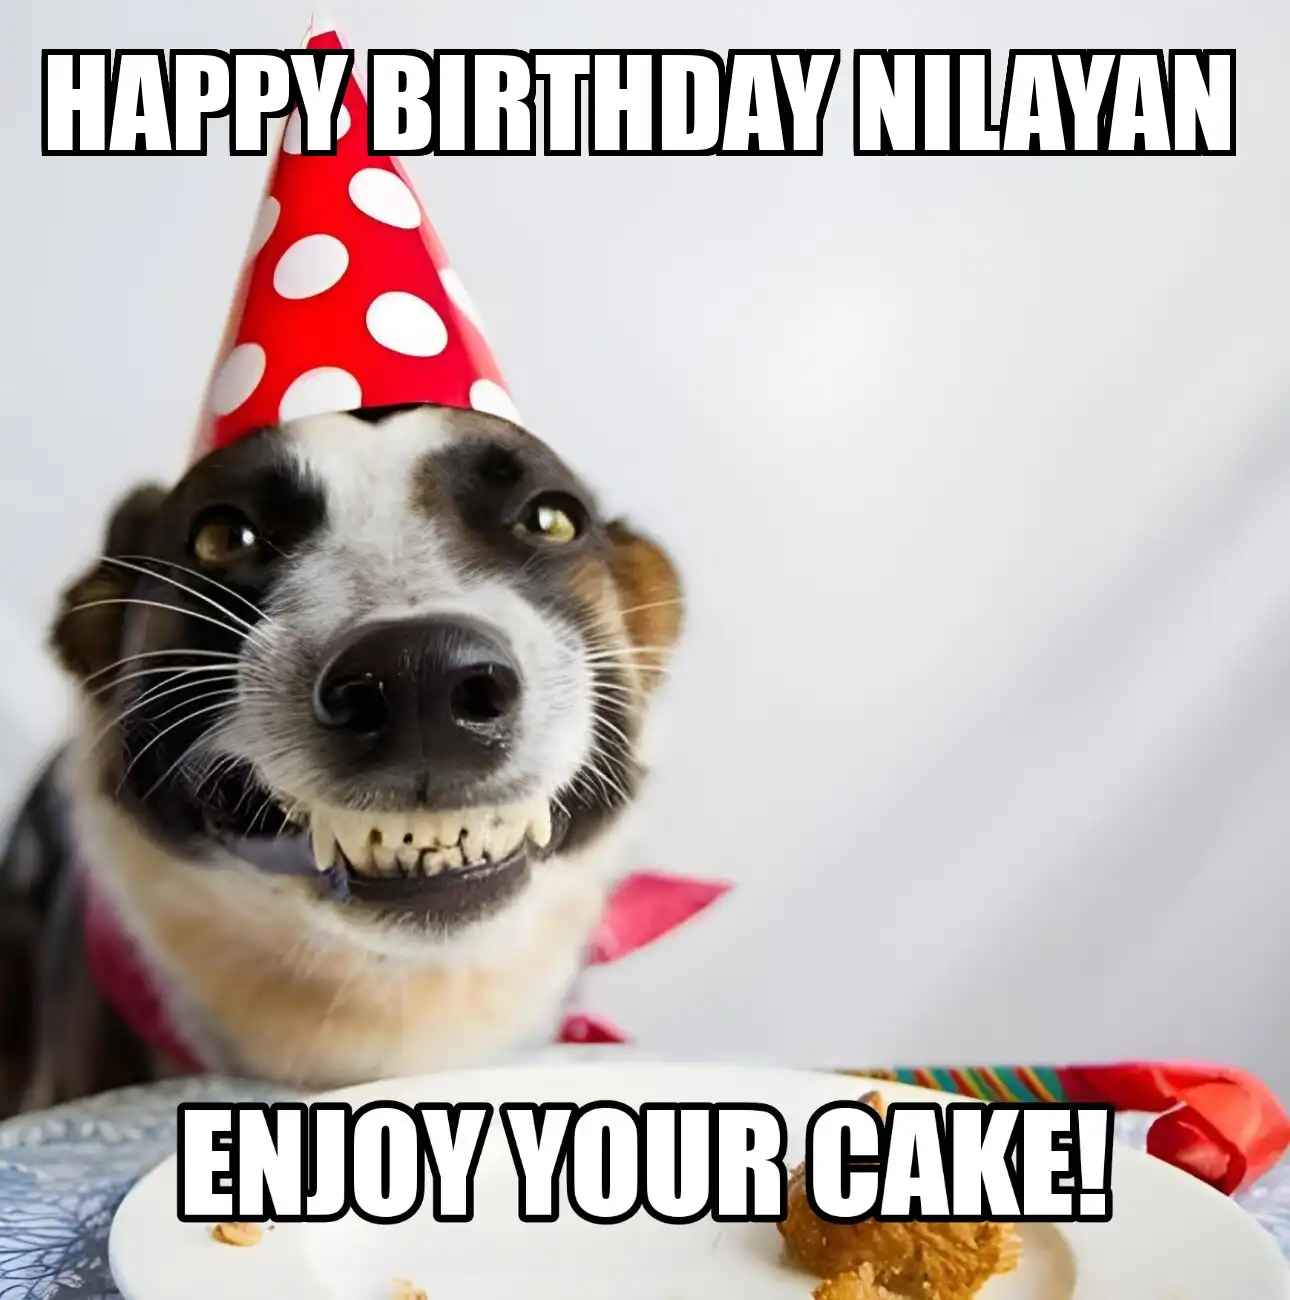 Happy Birthday Nilayan Enjoy Your Cake Dog Meme